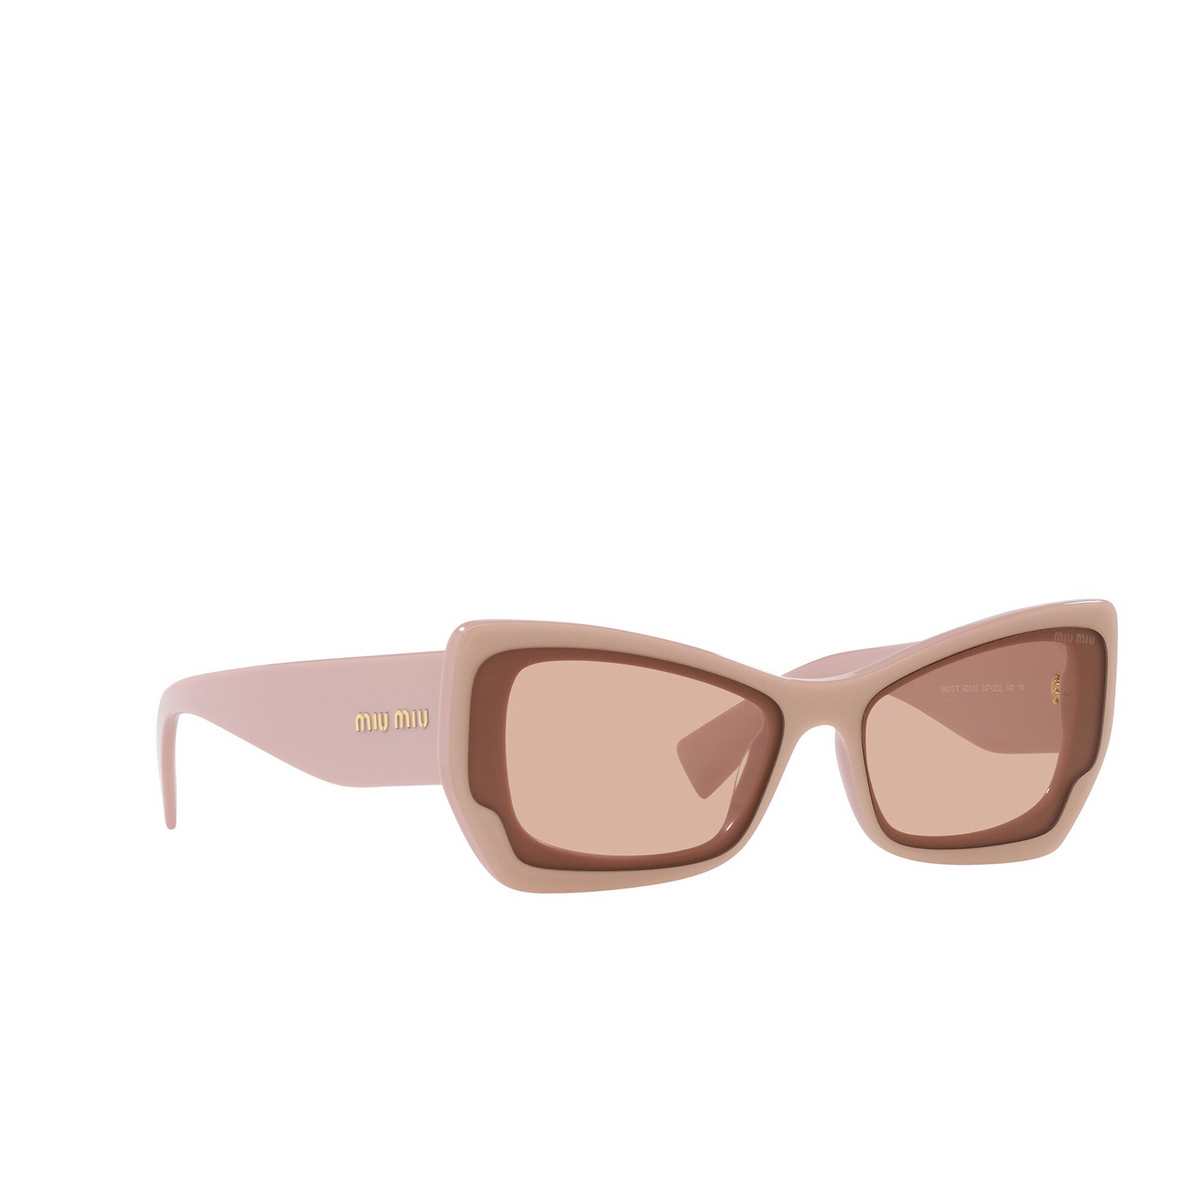 Miu Miu® Irregular Sunglasses: MU 07XS color Pink 03T3D2 - three-quarters view.